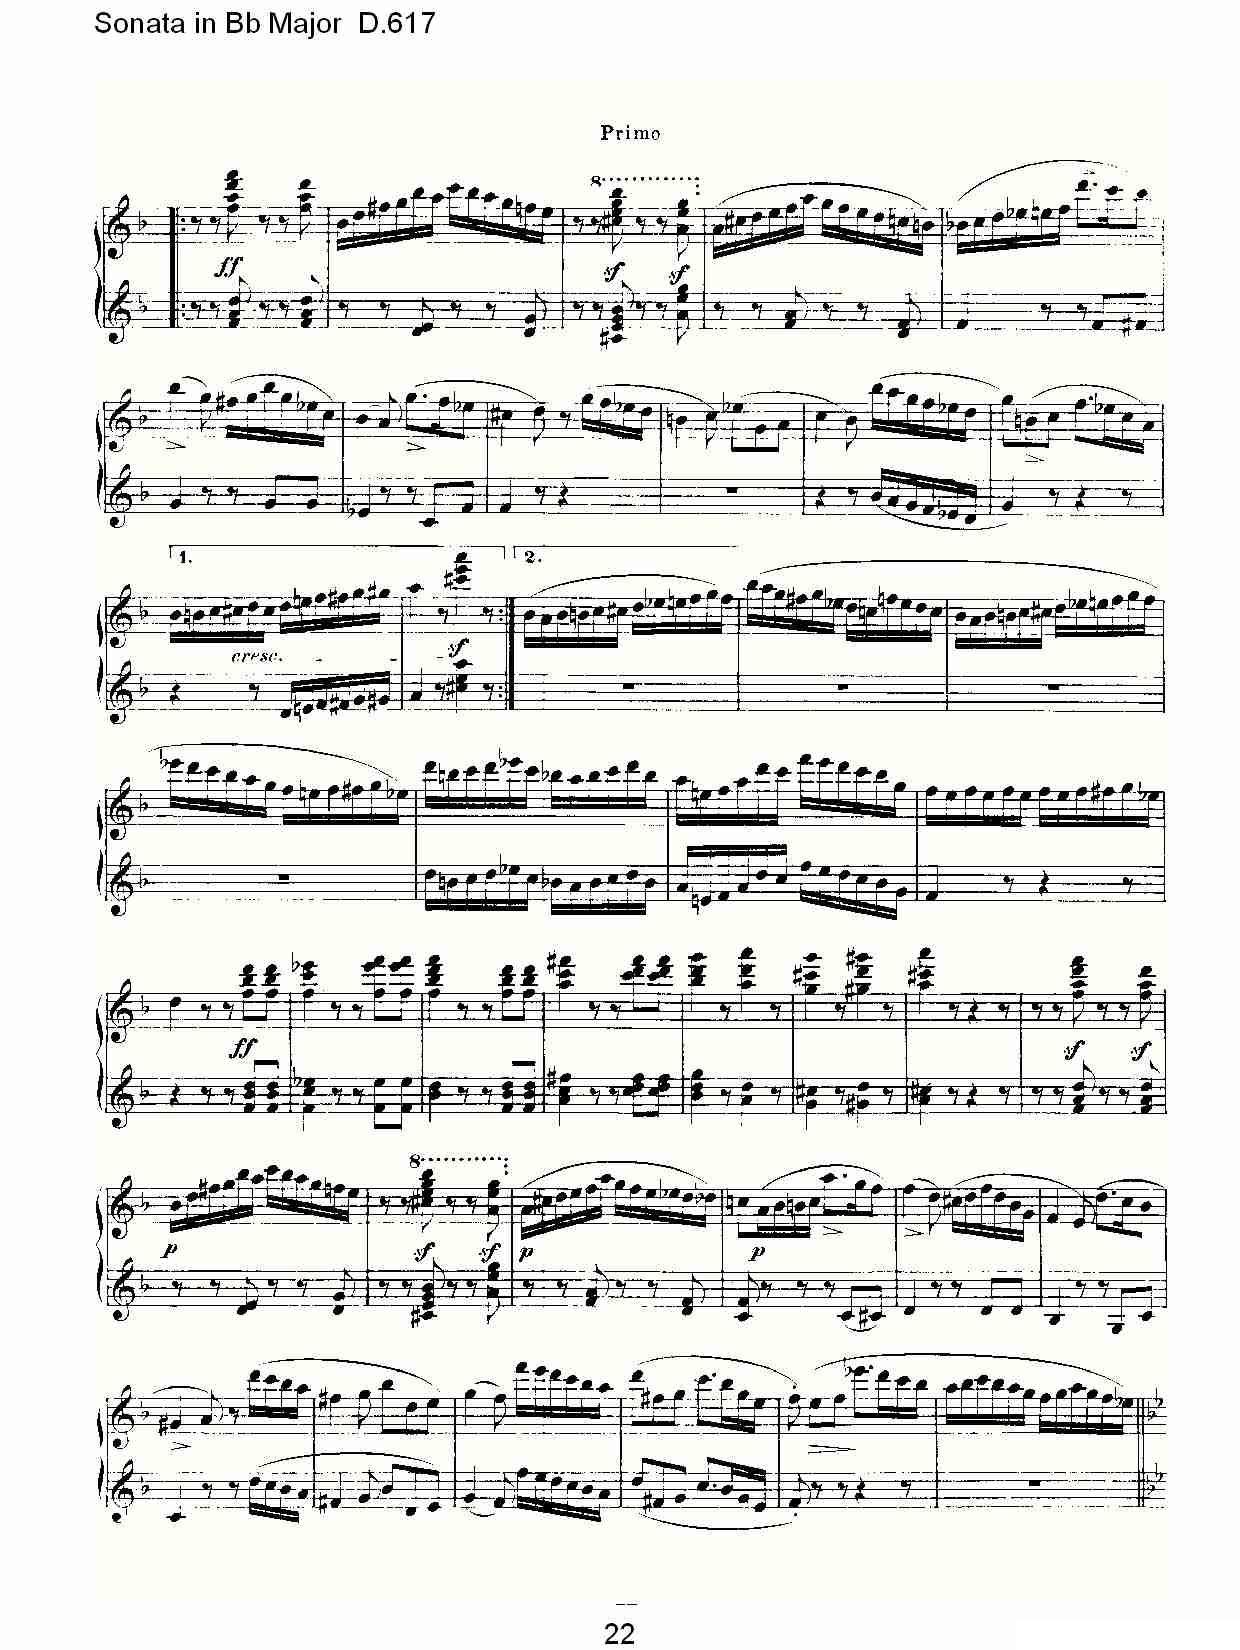 Sonata in Bb Major D.617（Bb大调奏鸣曲 D.617）钢琴曲谱（图22）